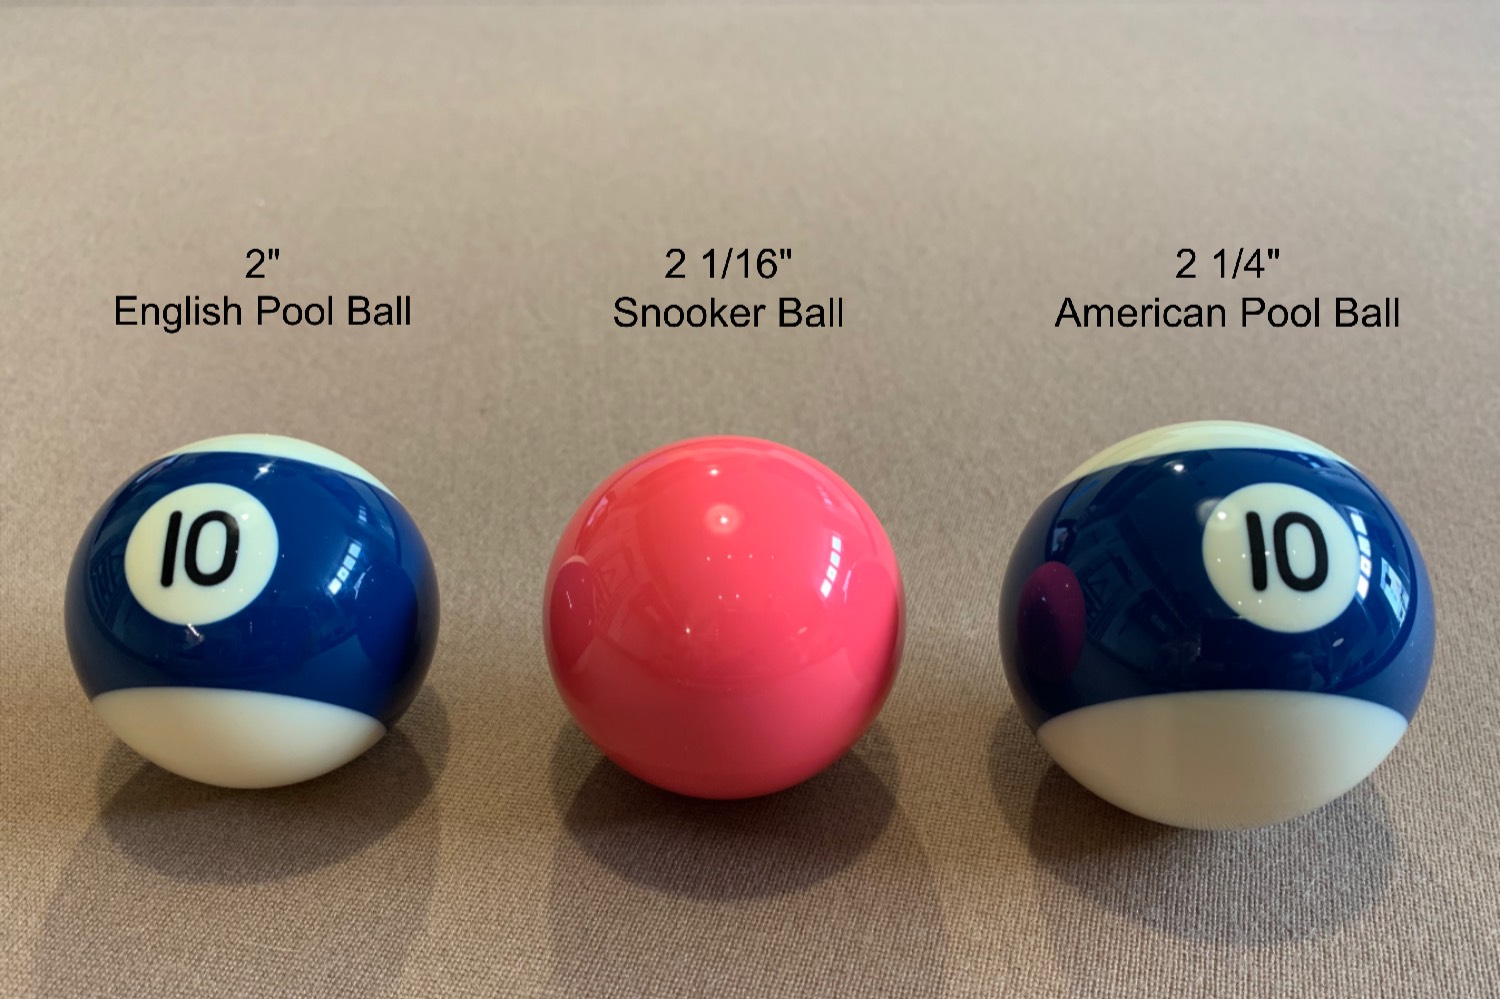 American Spots & Stripes Pool Balls 2 1/4" ex demo limited stock spare balls 